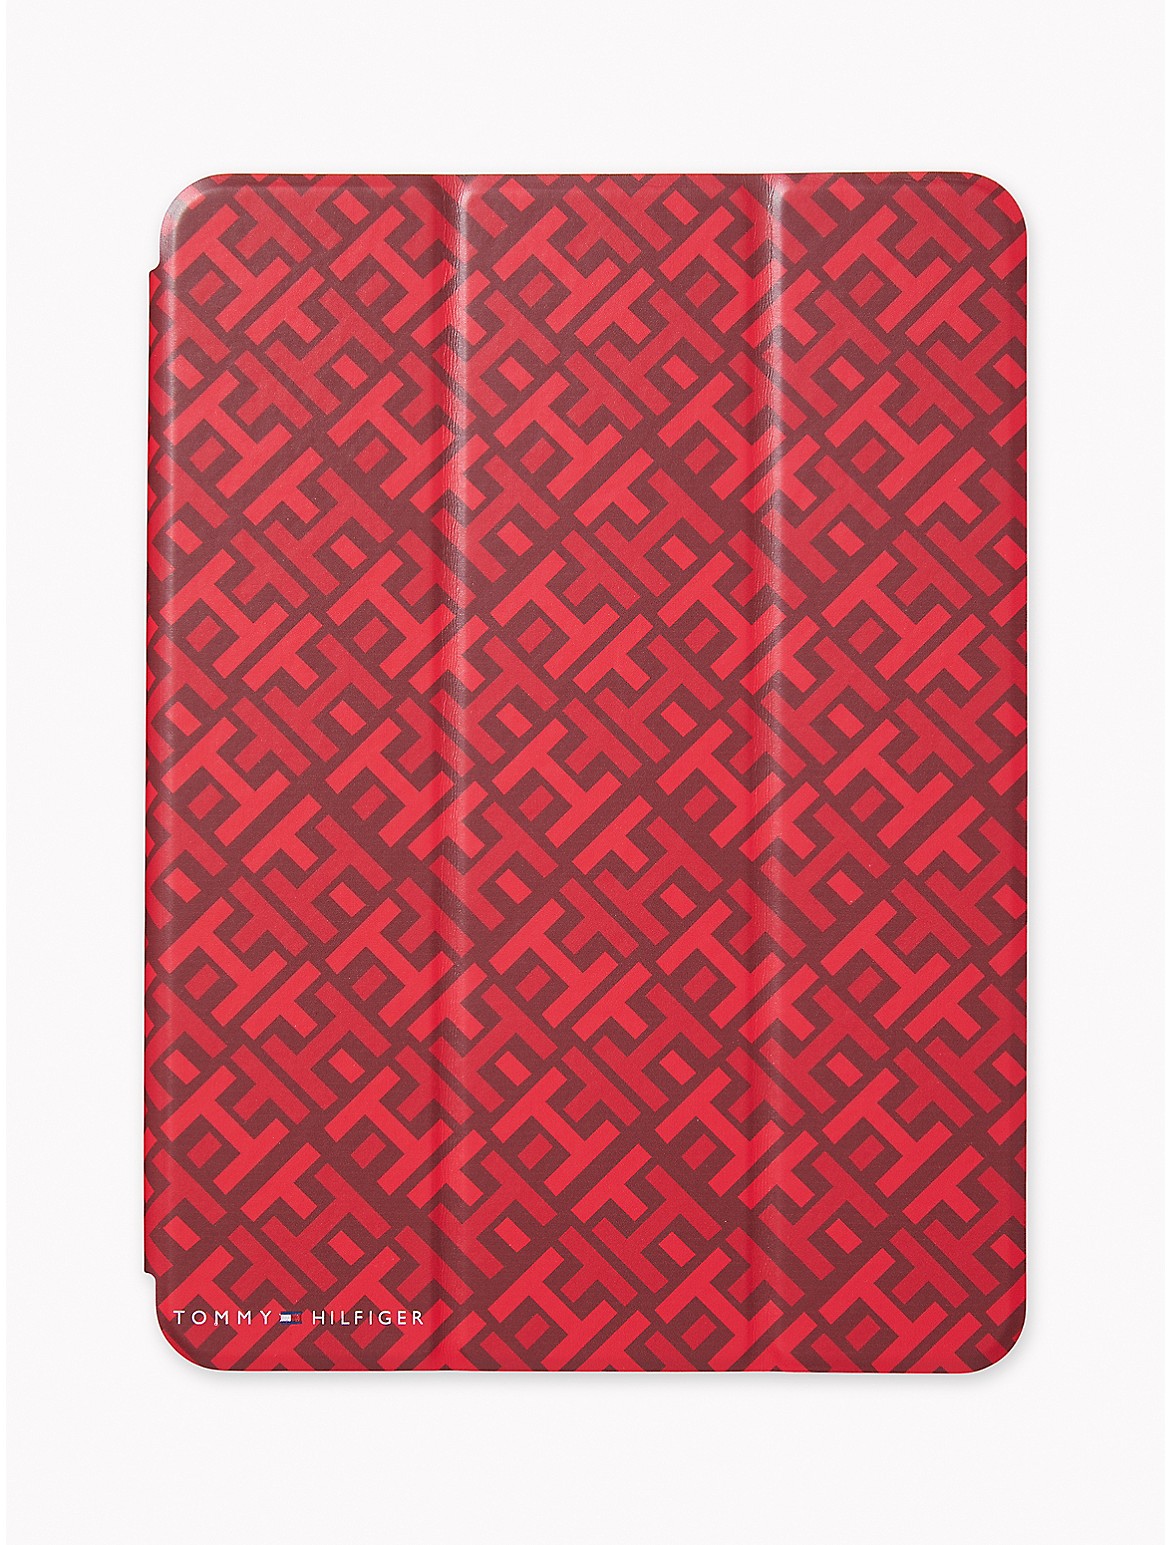 Tommy Hilfiger Monogram iPad Case - Red